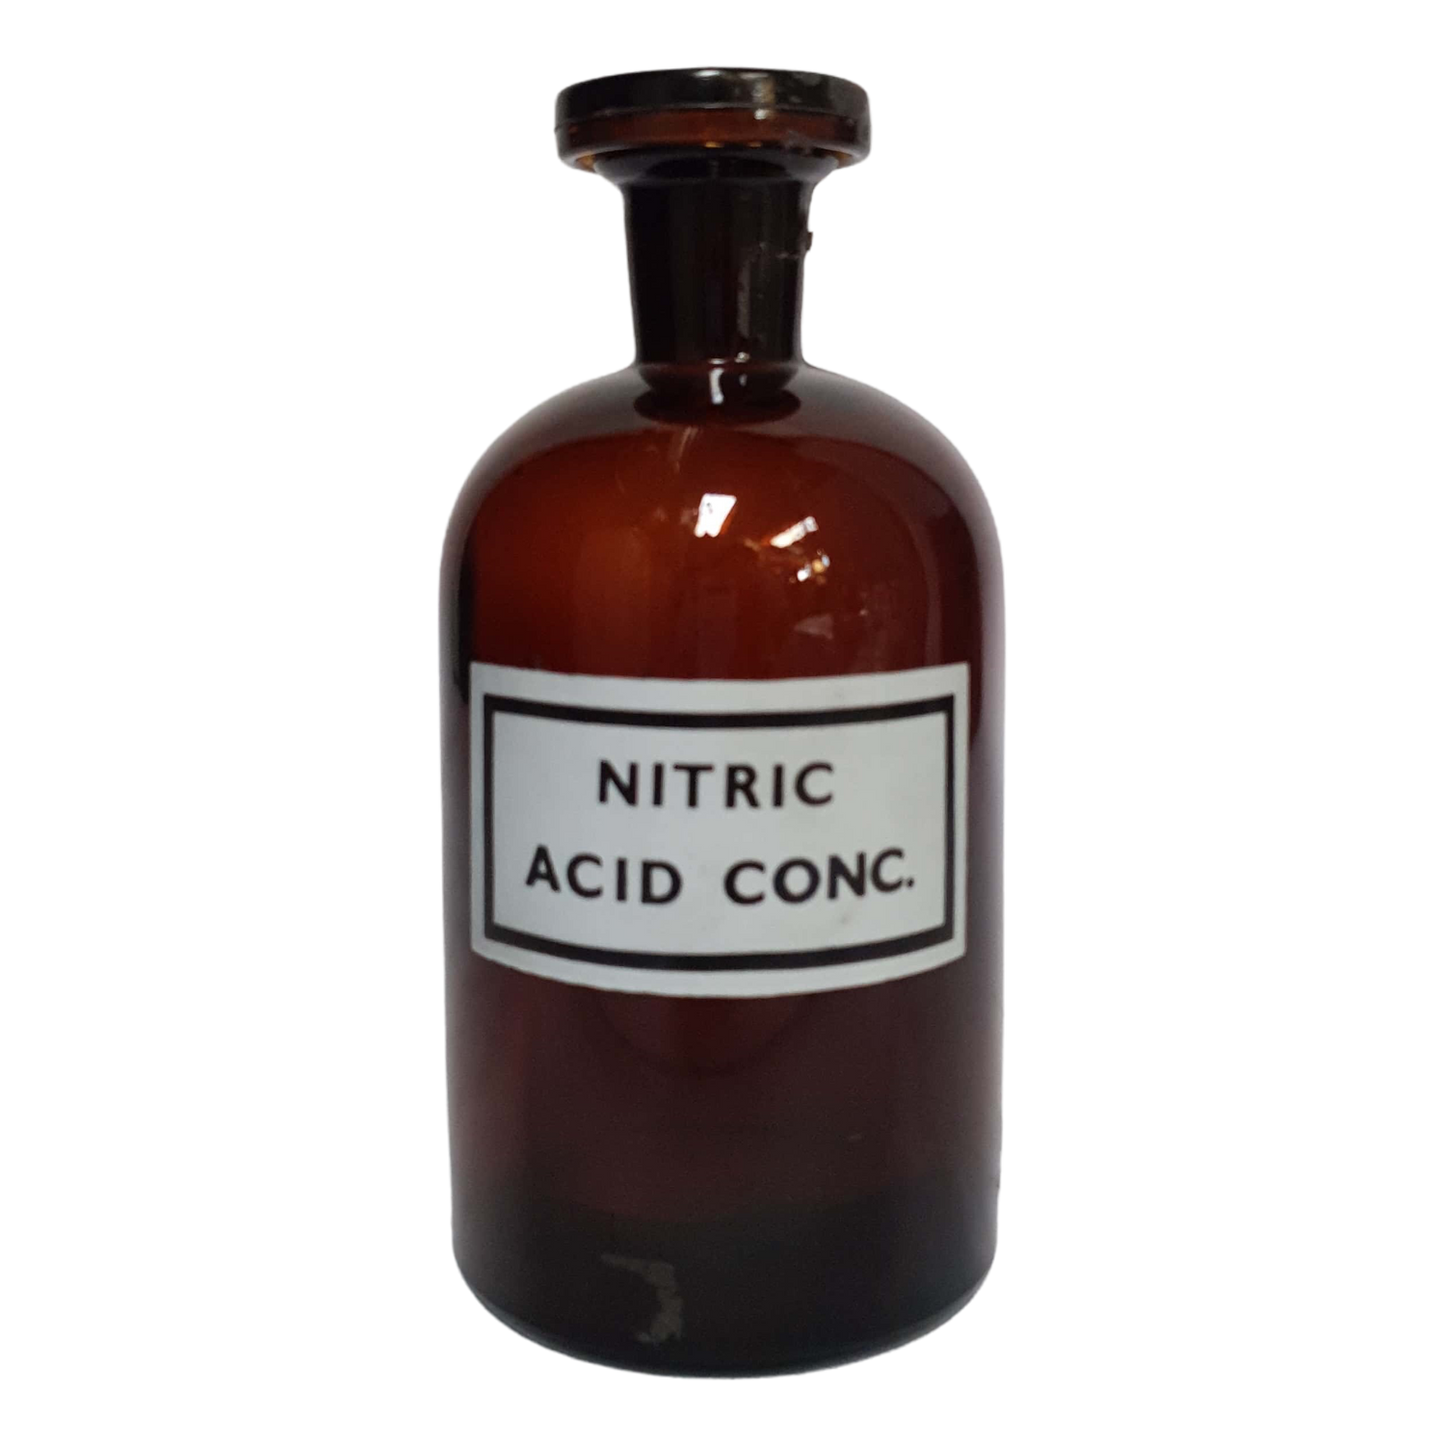 Botella farmacia nitric acid conc antigua